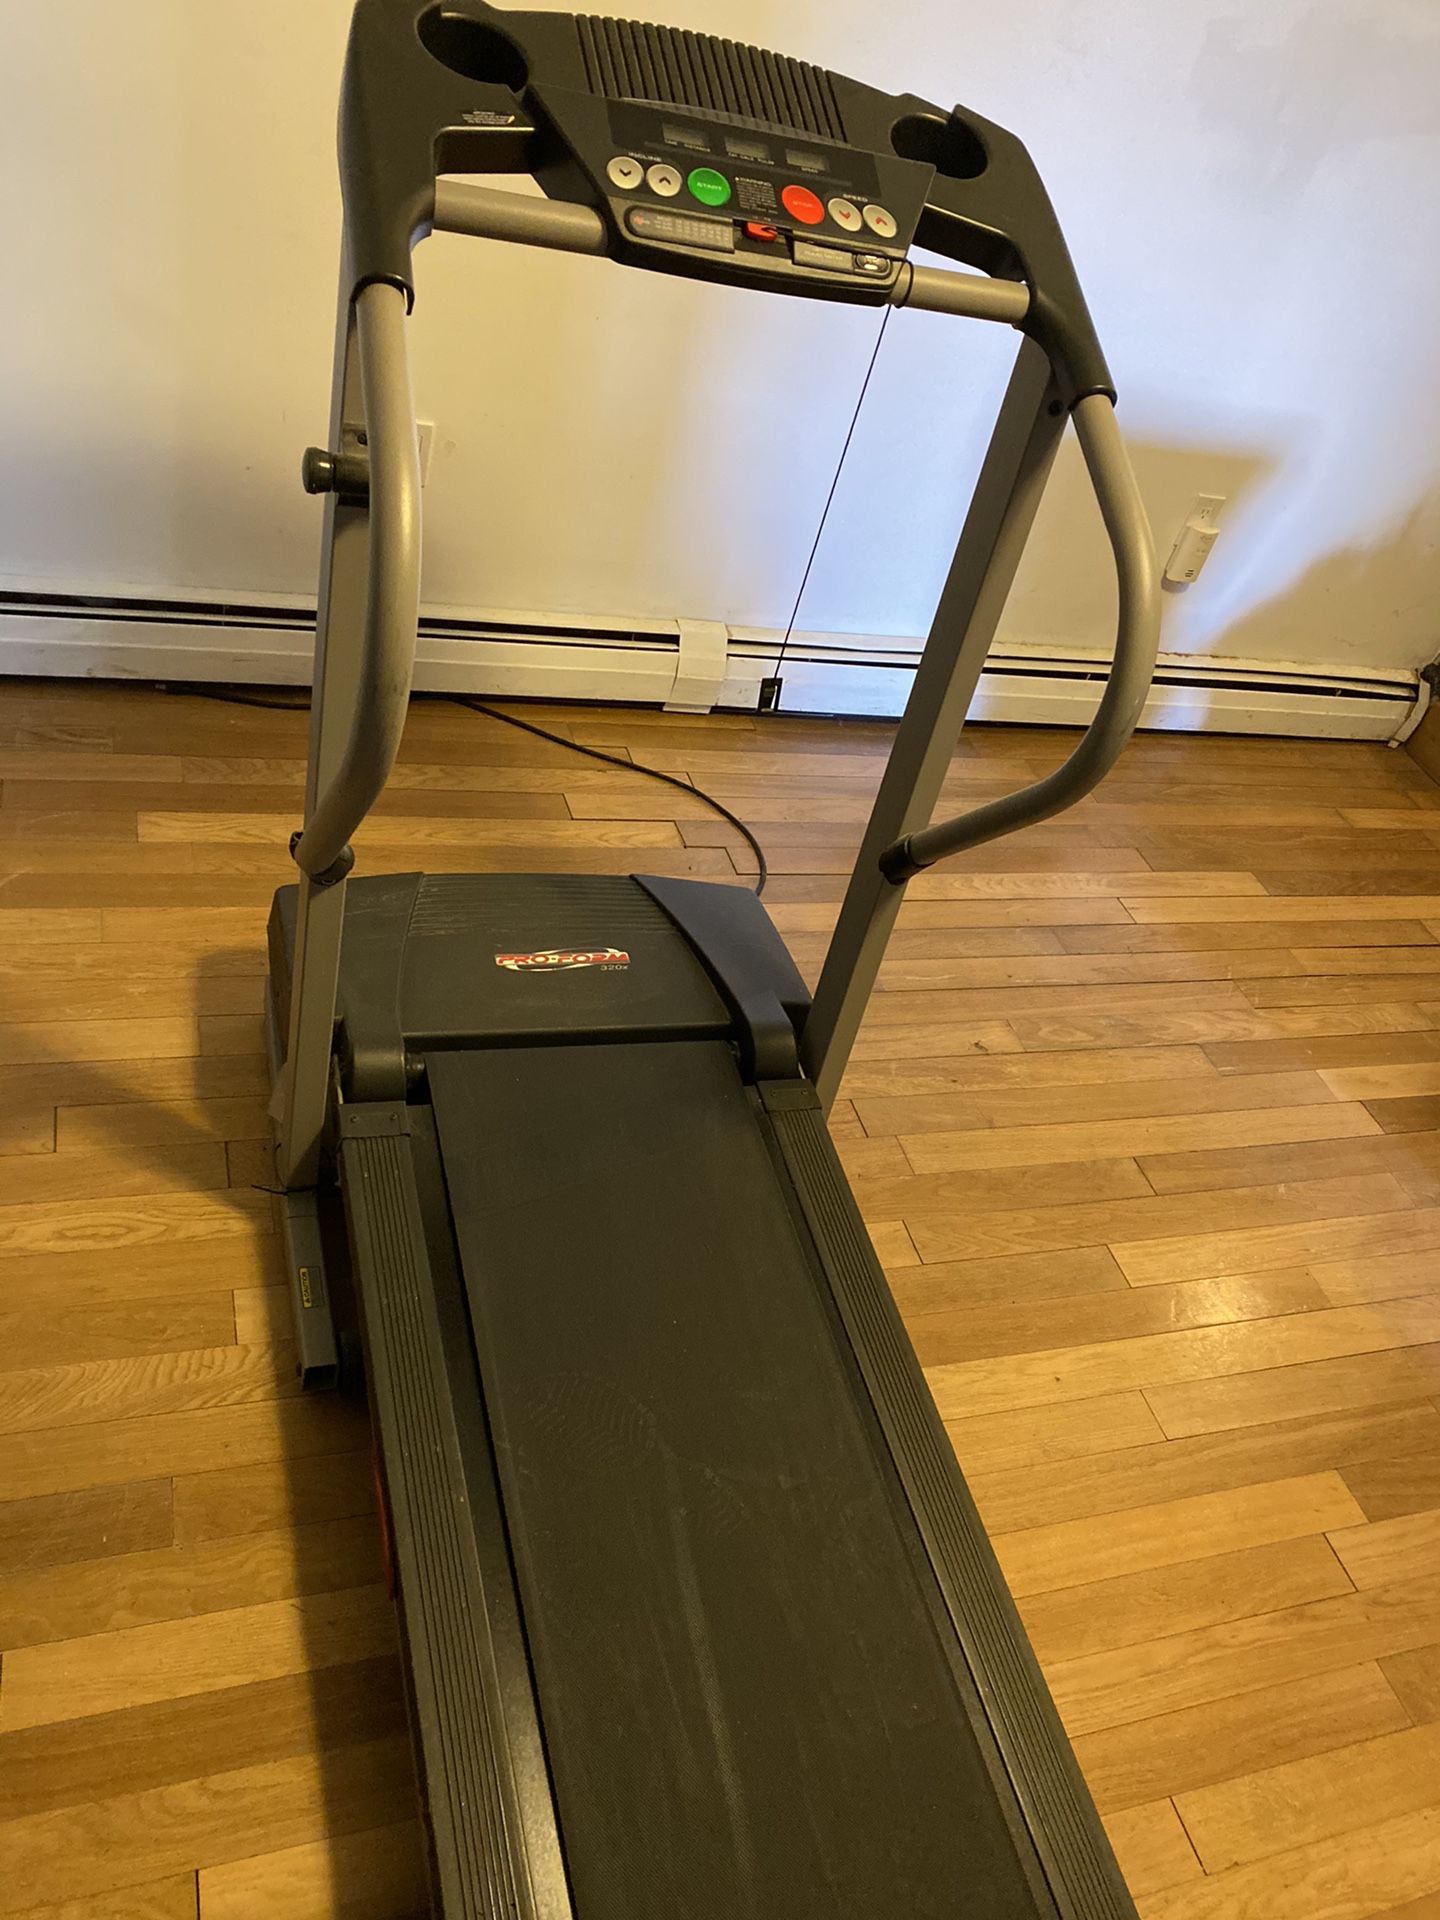 Proform 320x Treadmill